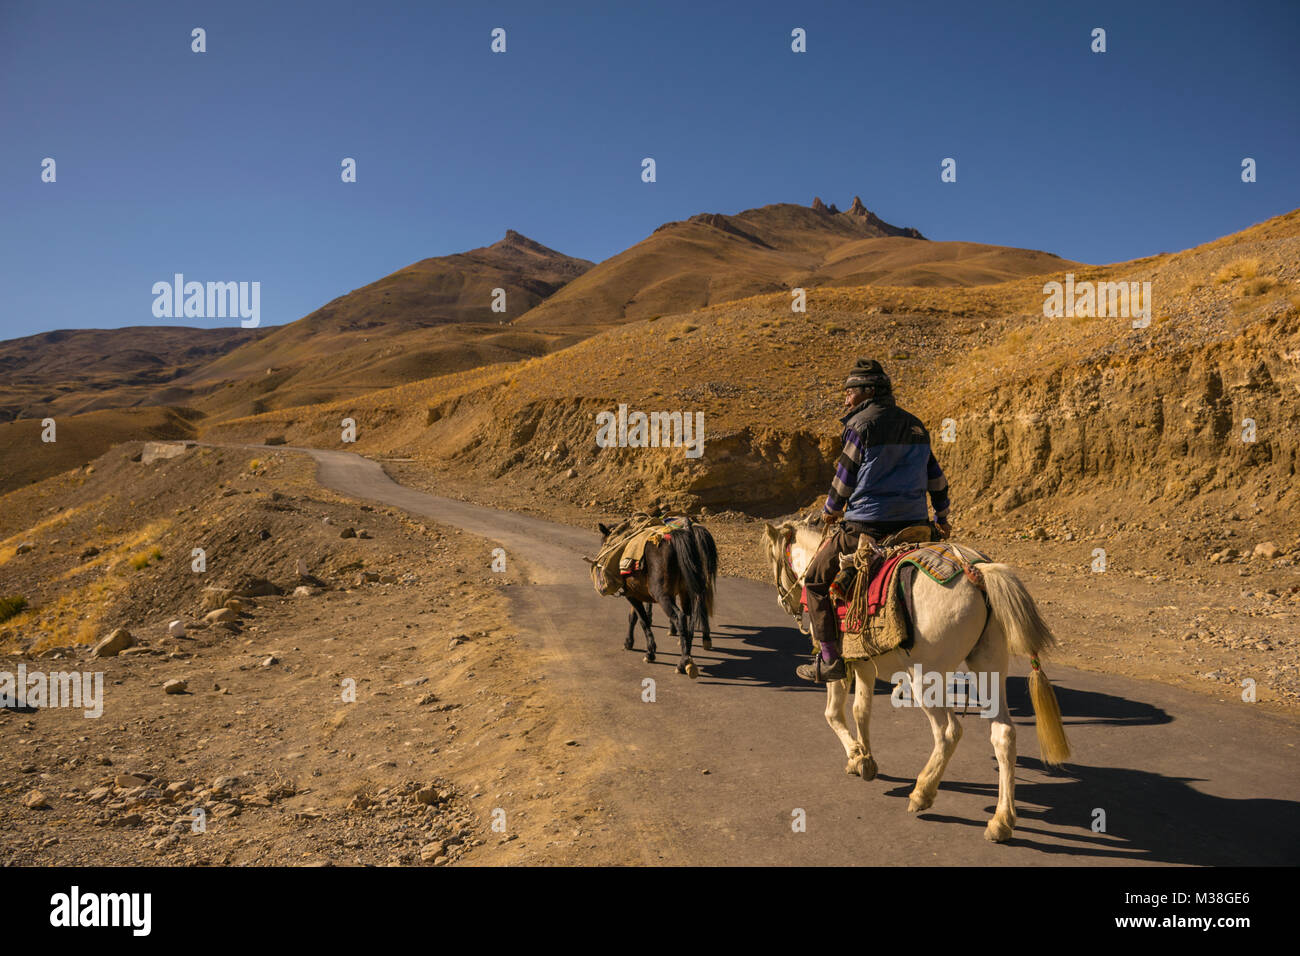 A Man riding a horse and guiding packhorses through a mountain road Stock Photo